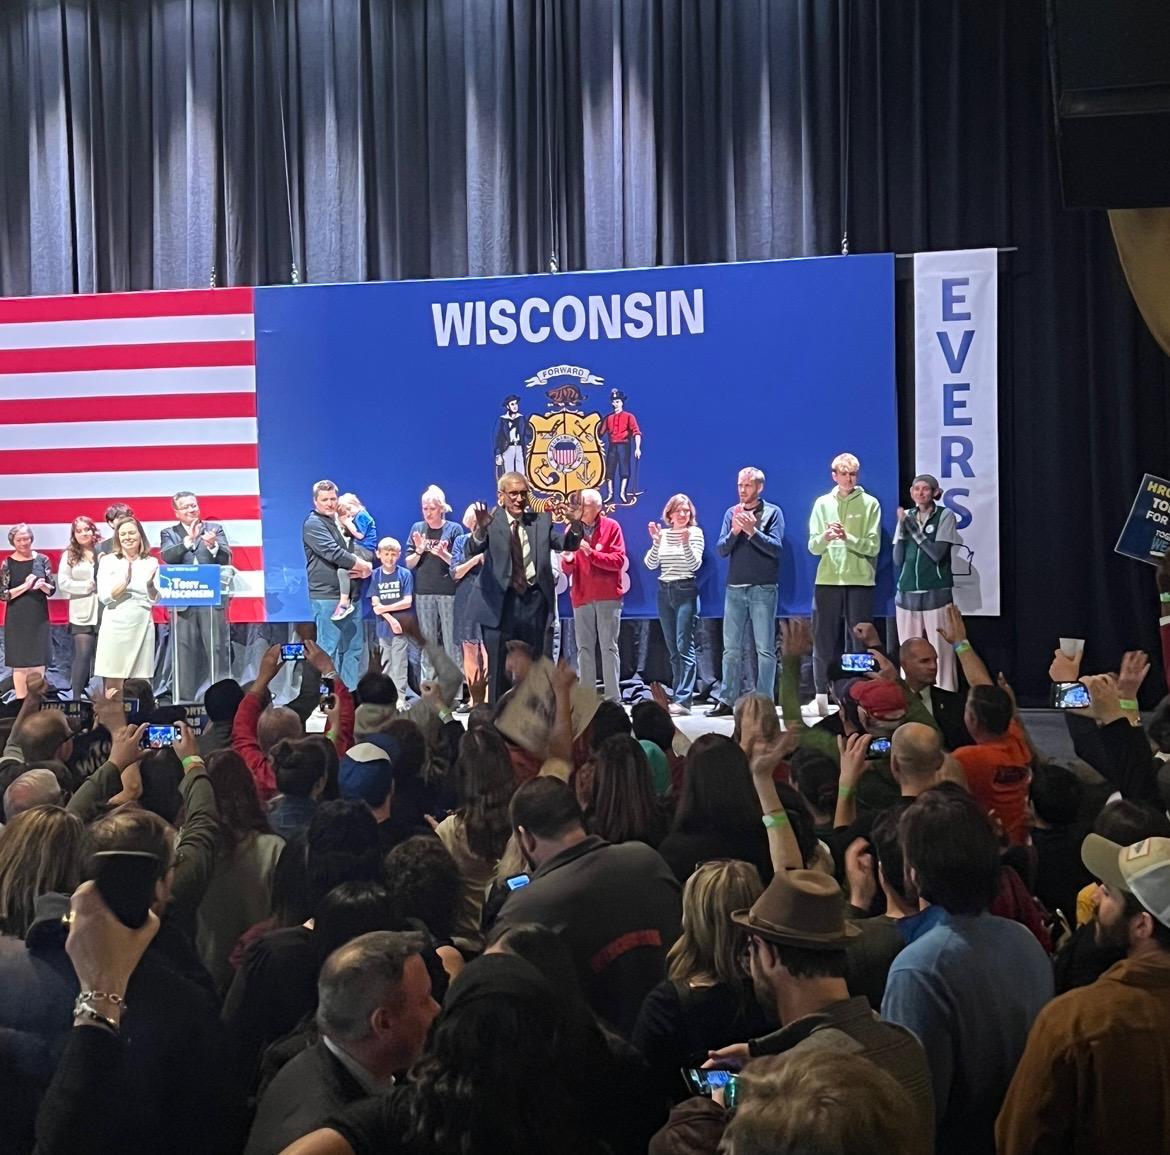 Tony+Evers+wins+Wisconsin+gubernatorial+race